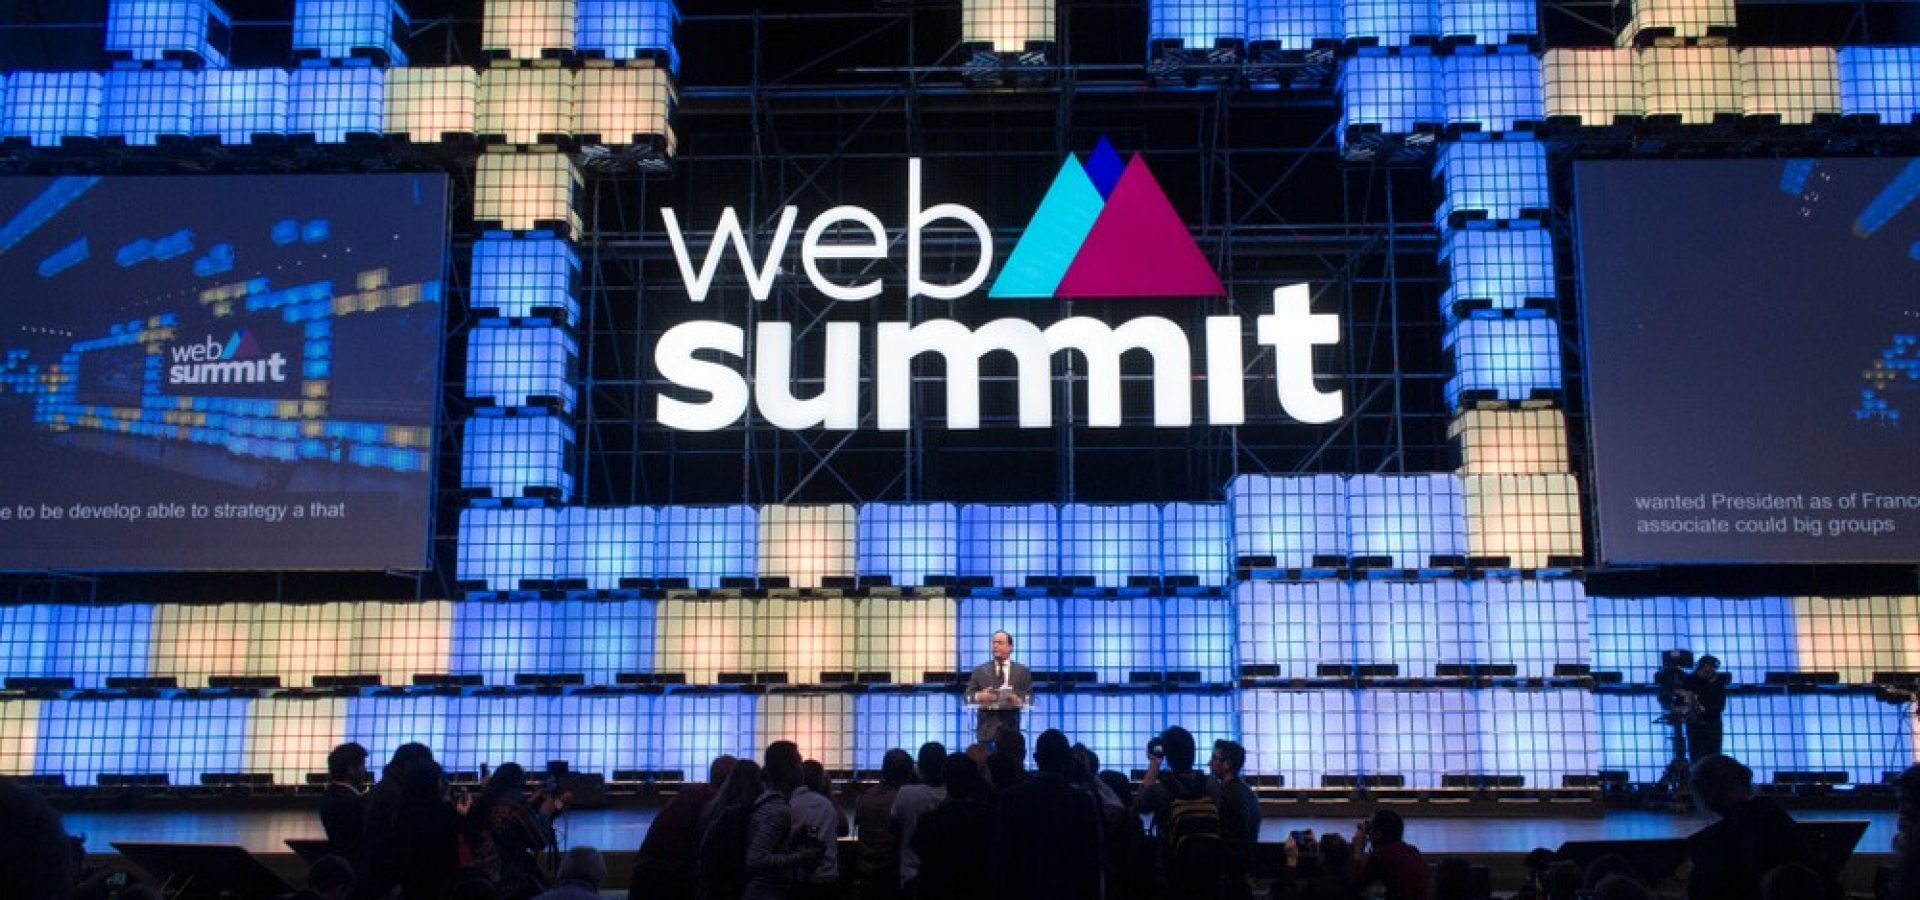 Web Summit sign